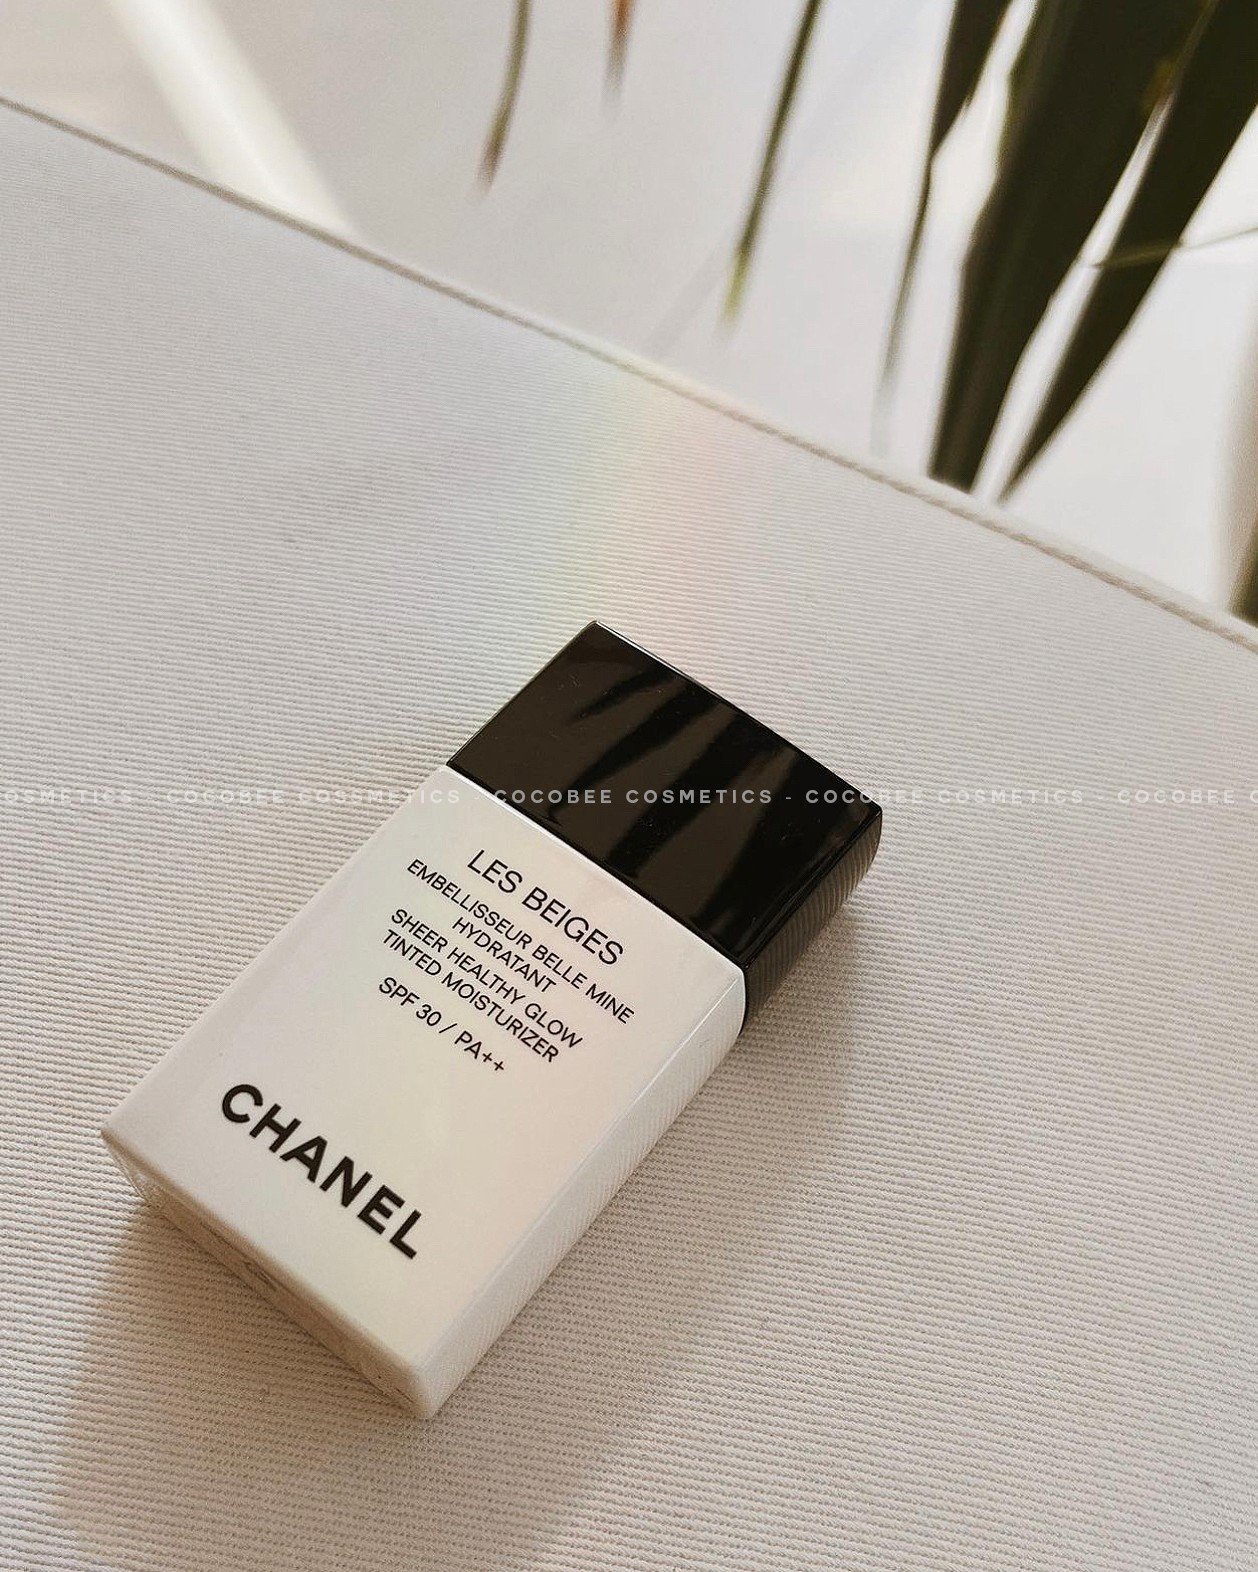 Chanel Les Beiges Sheer Healthy Glow Tinted Moisturiser